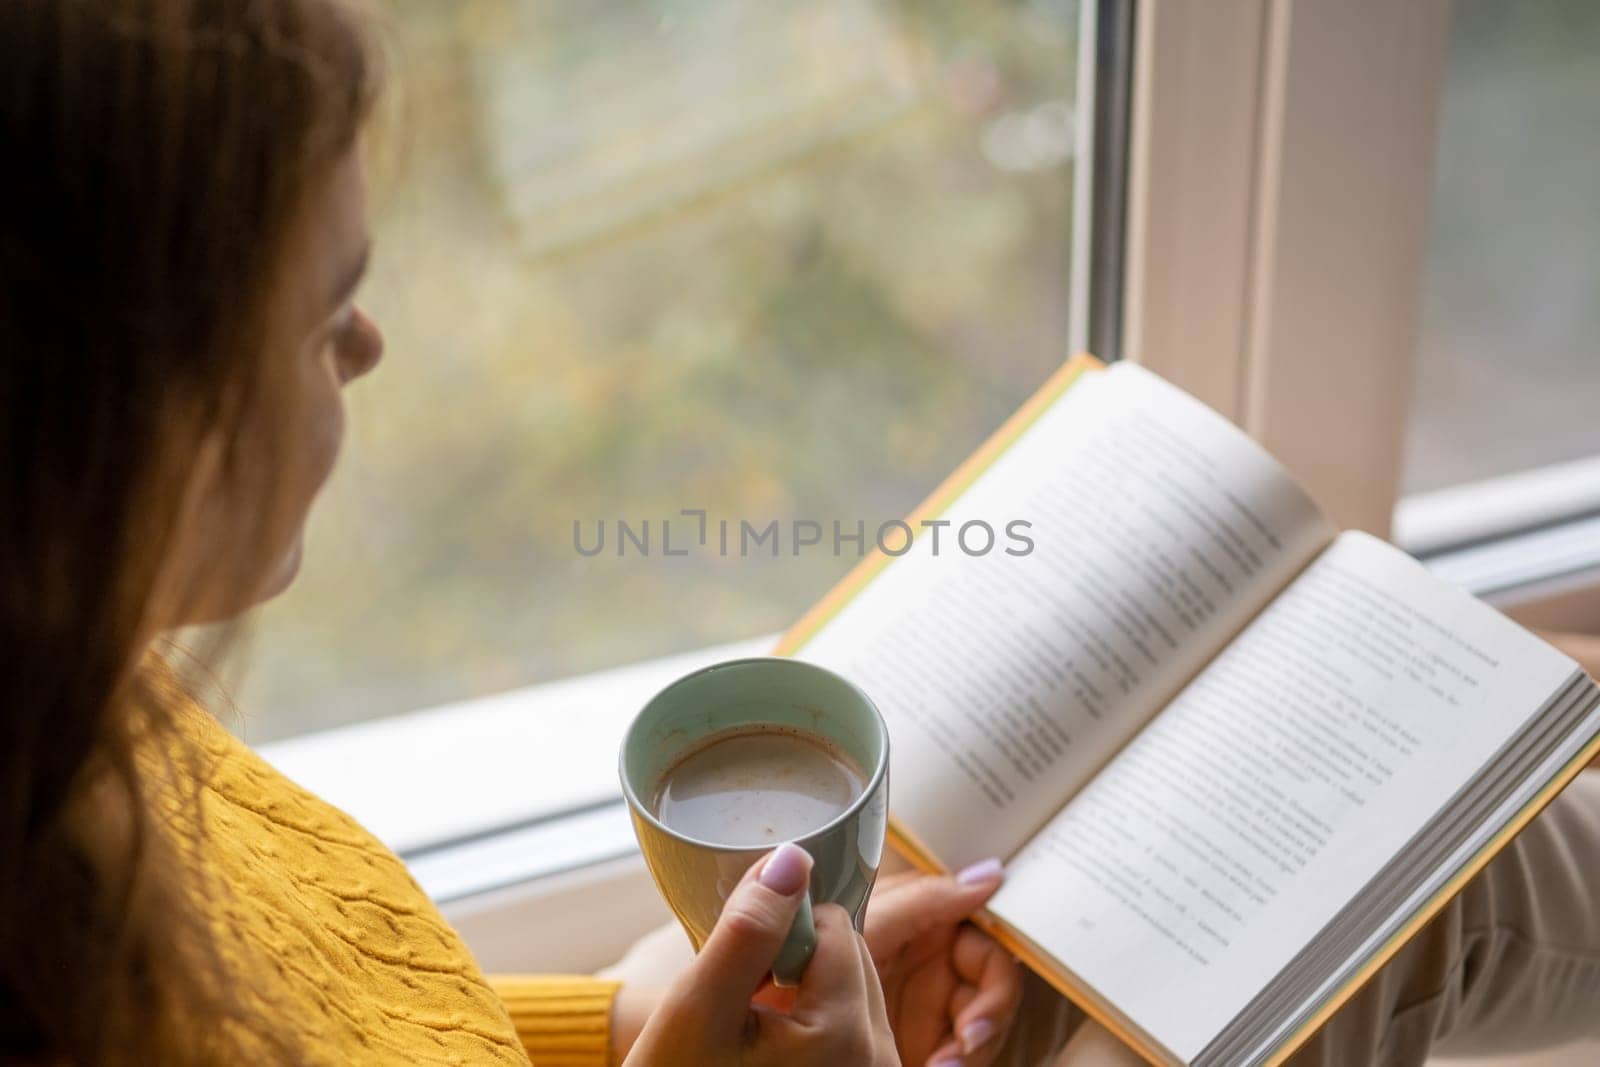 Young beautiful woman near window yellow knitted sweater read book by AnatoliiFoto